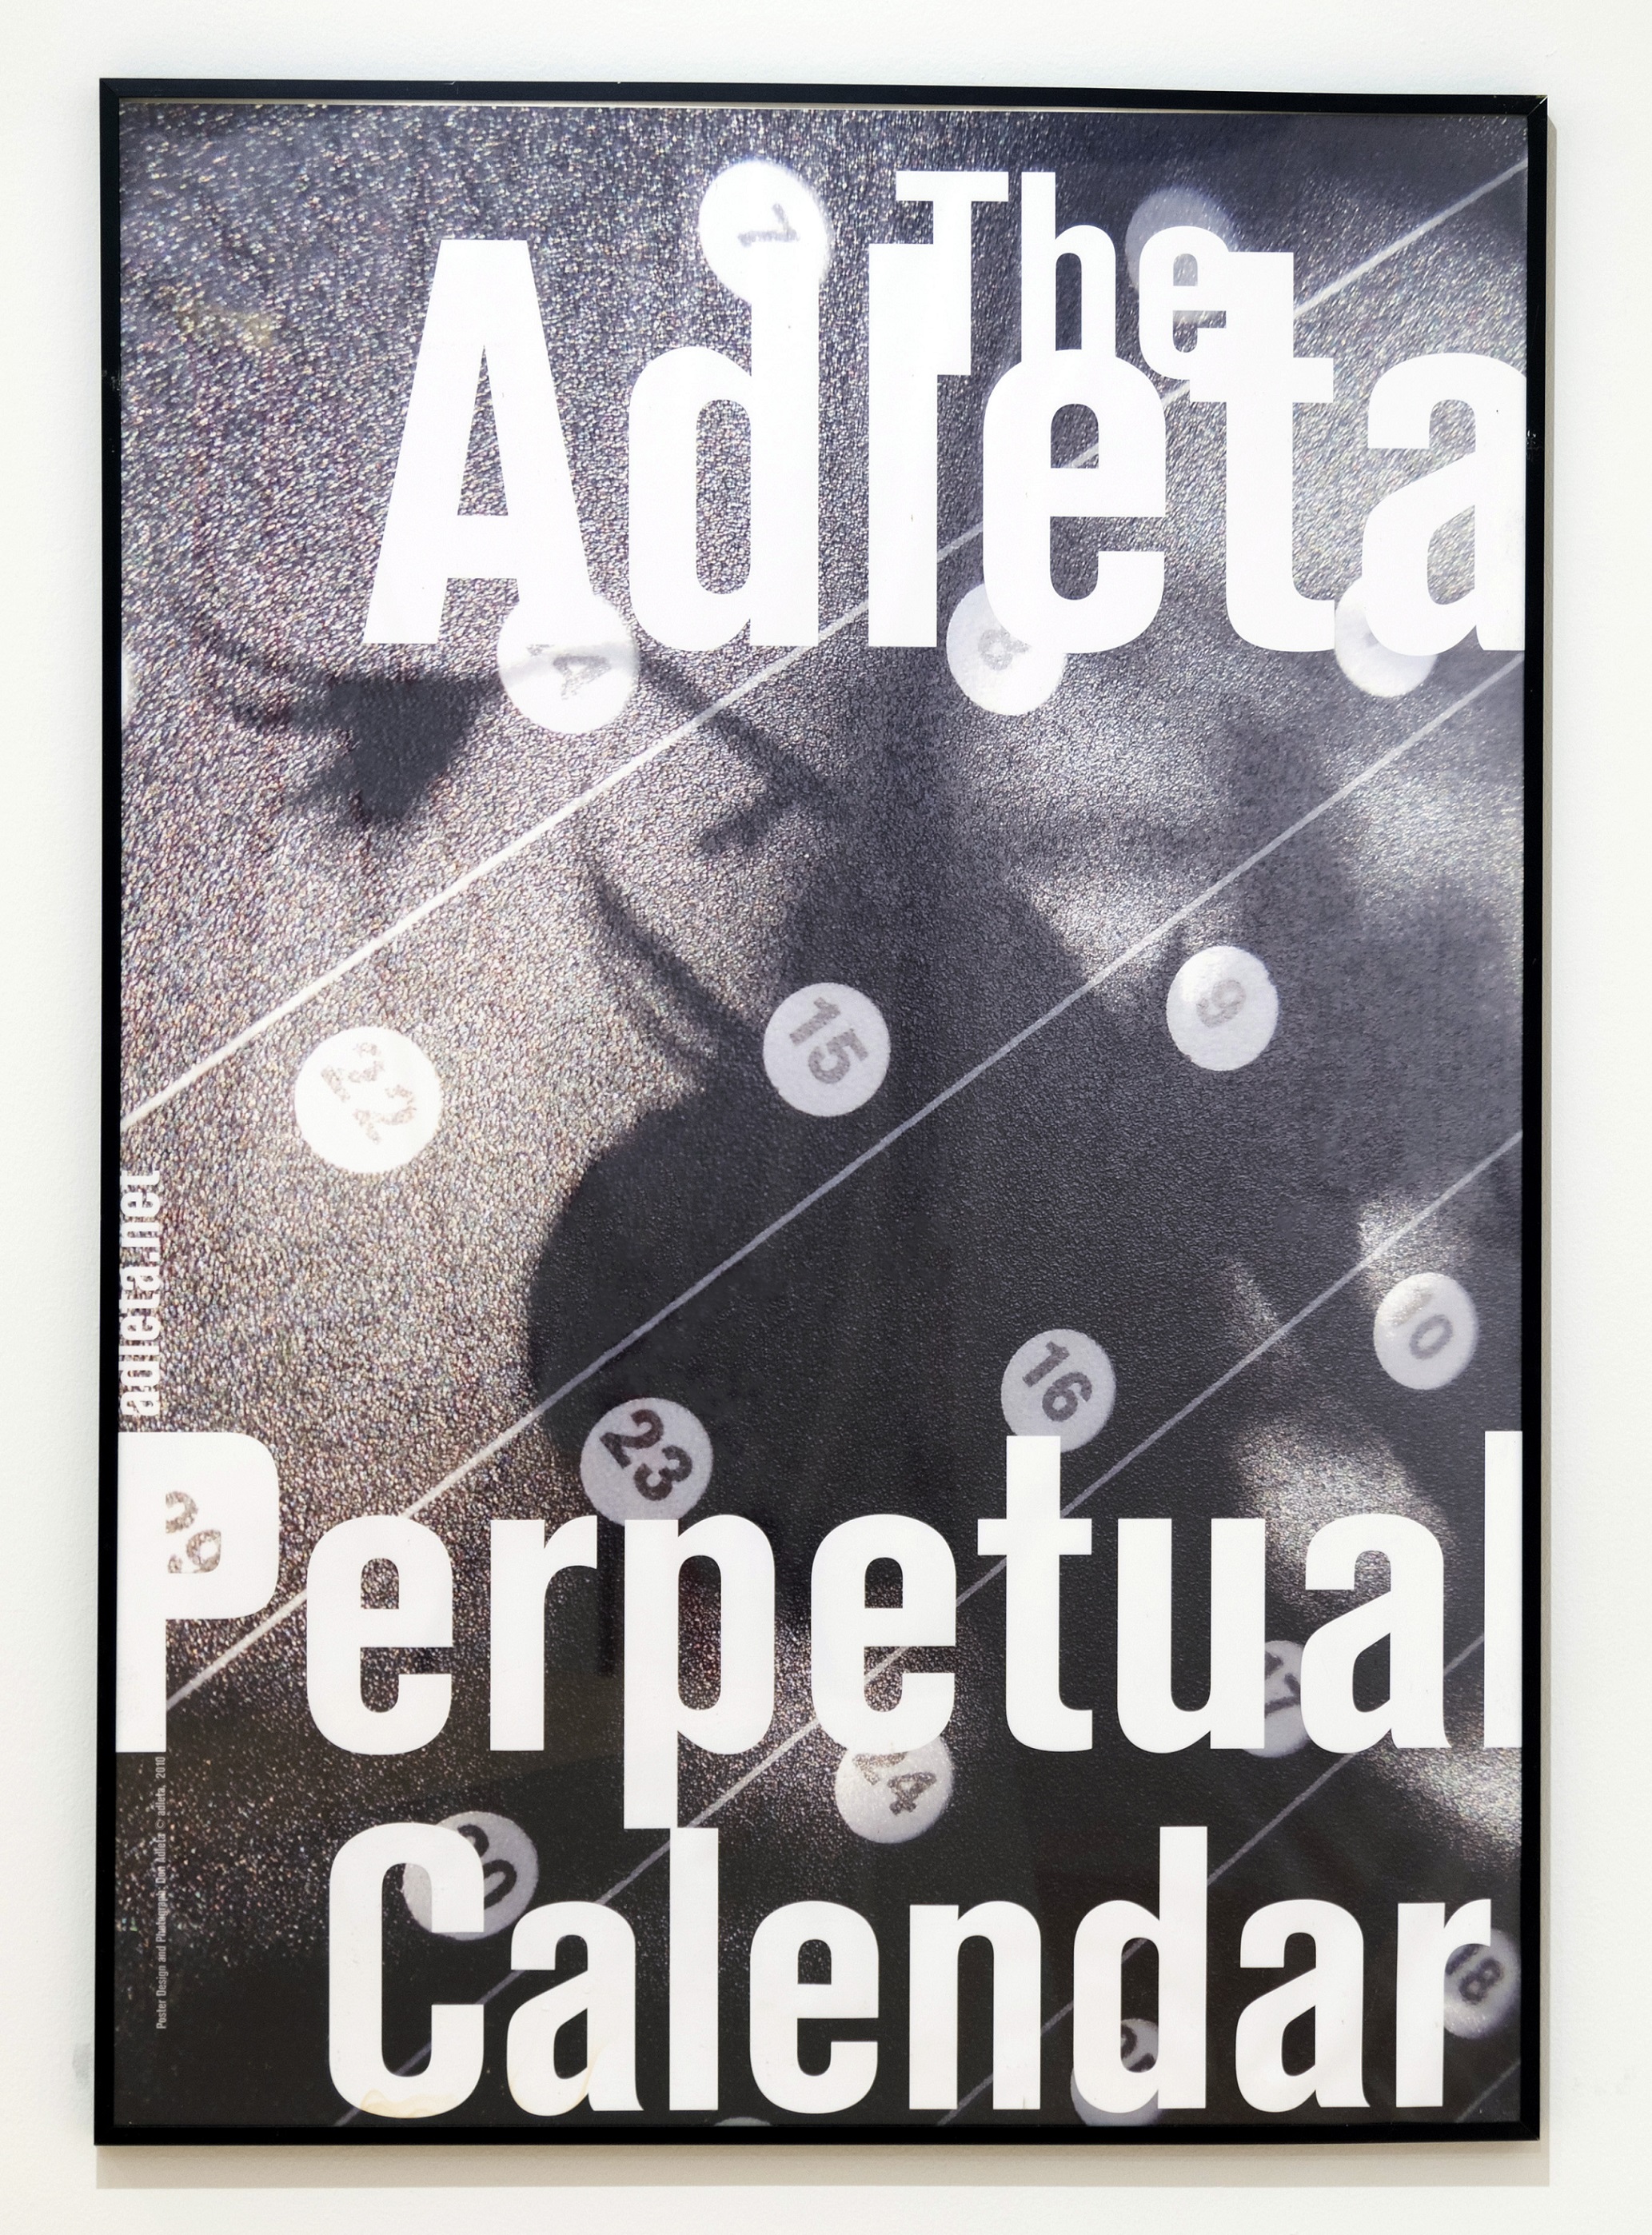 Promotional Poster for the Adleta Perpetual Calendar